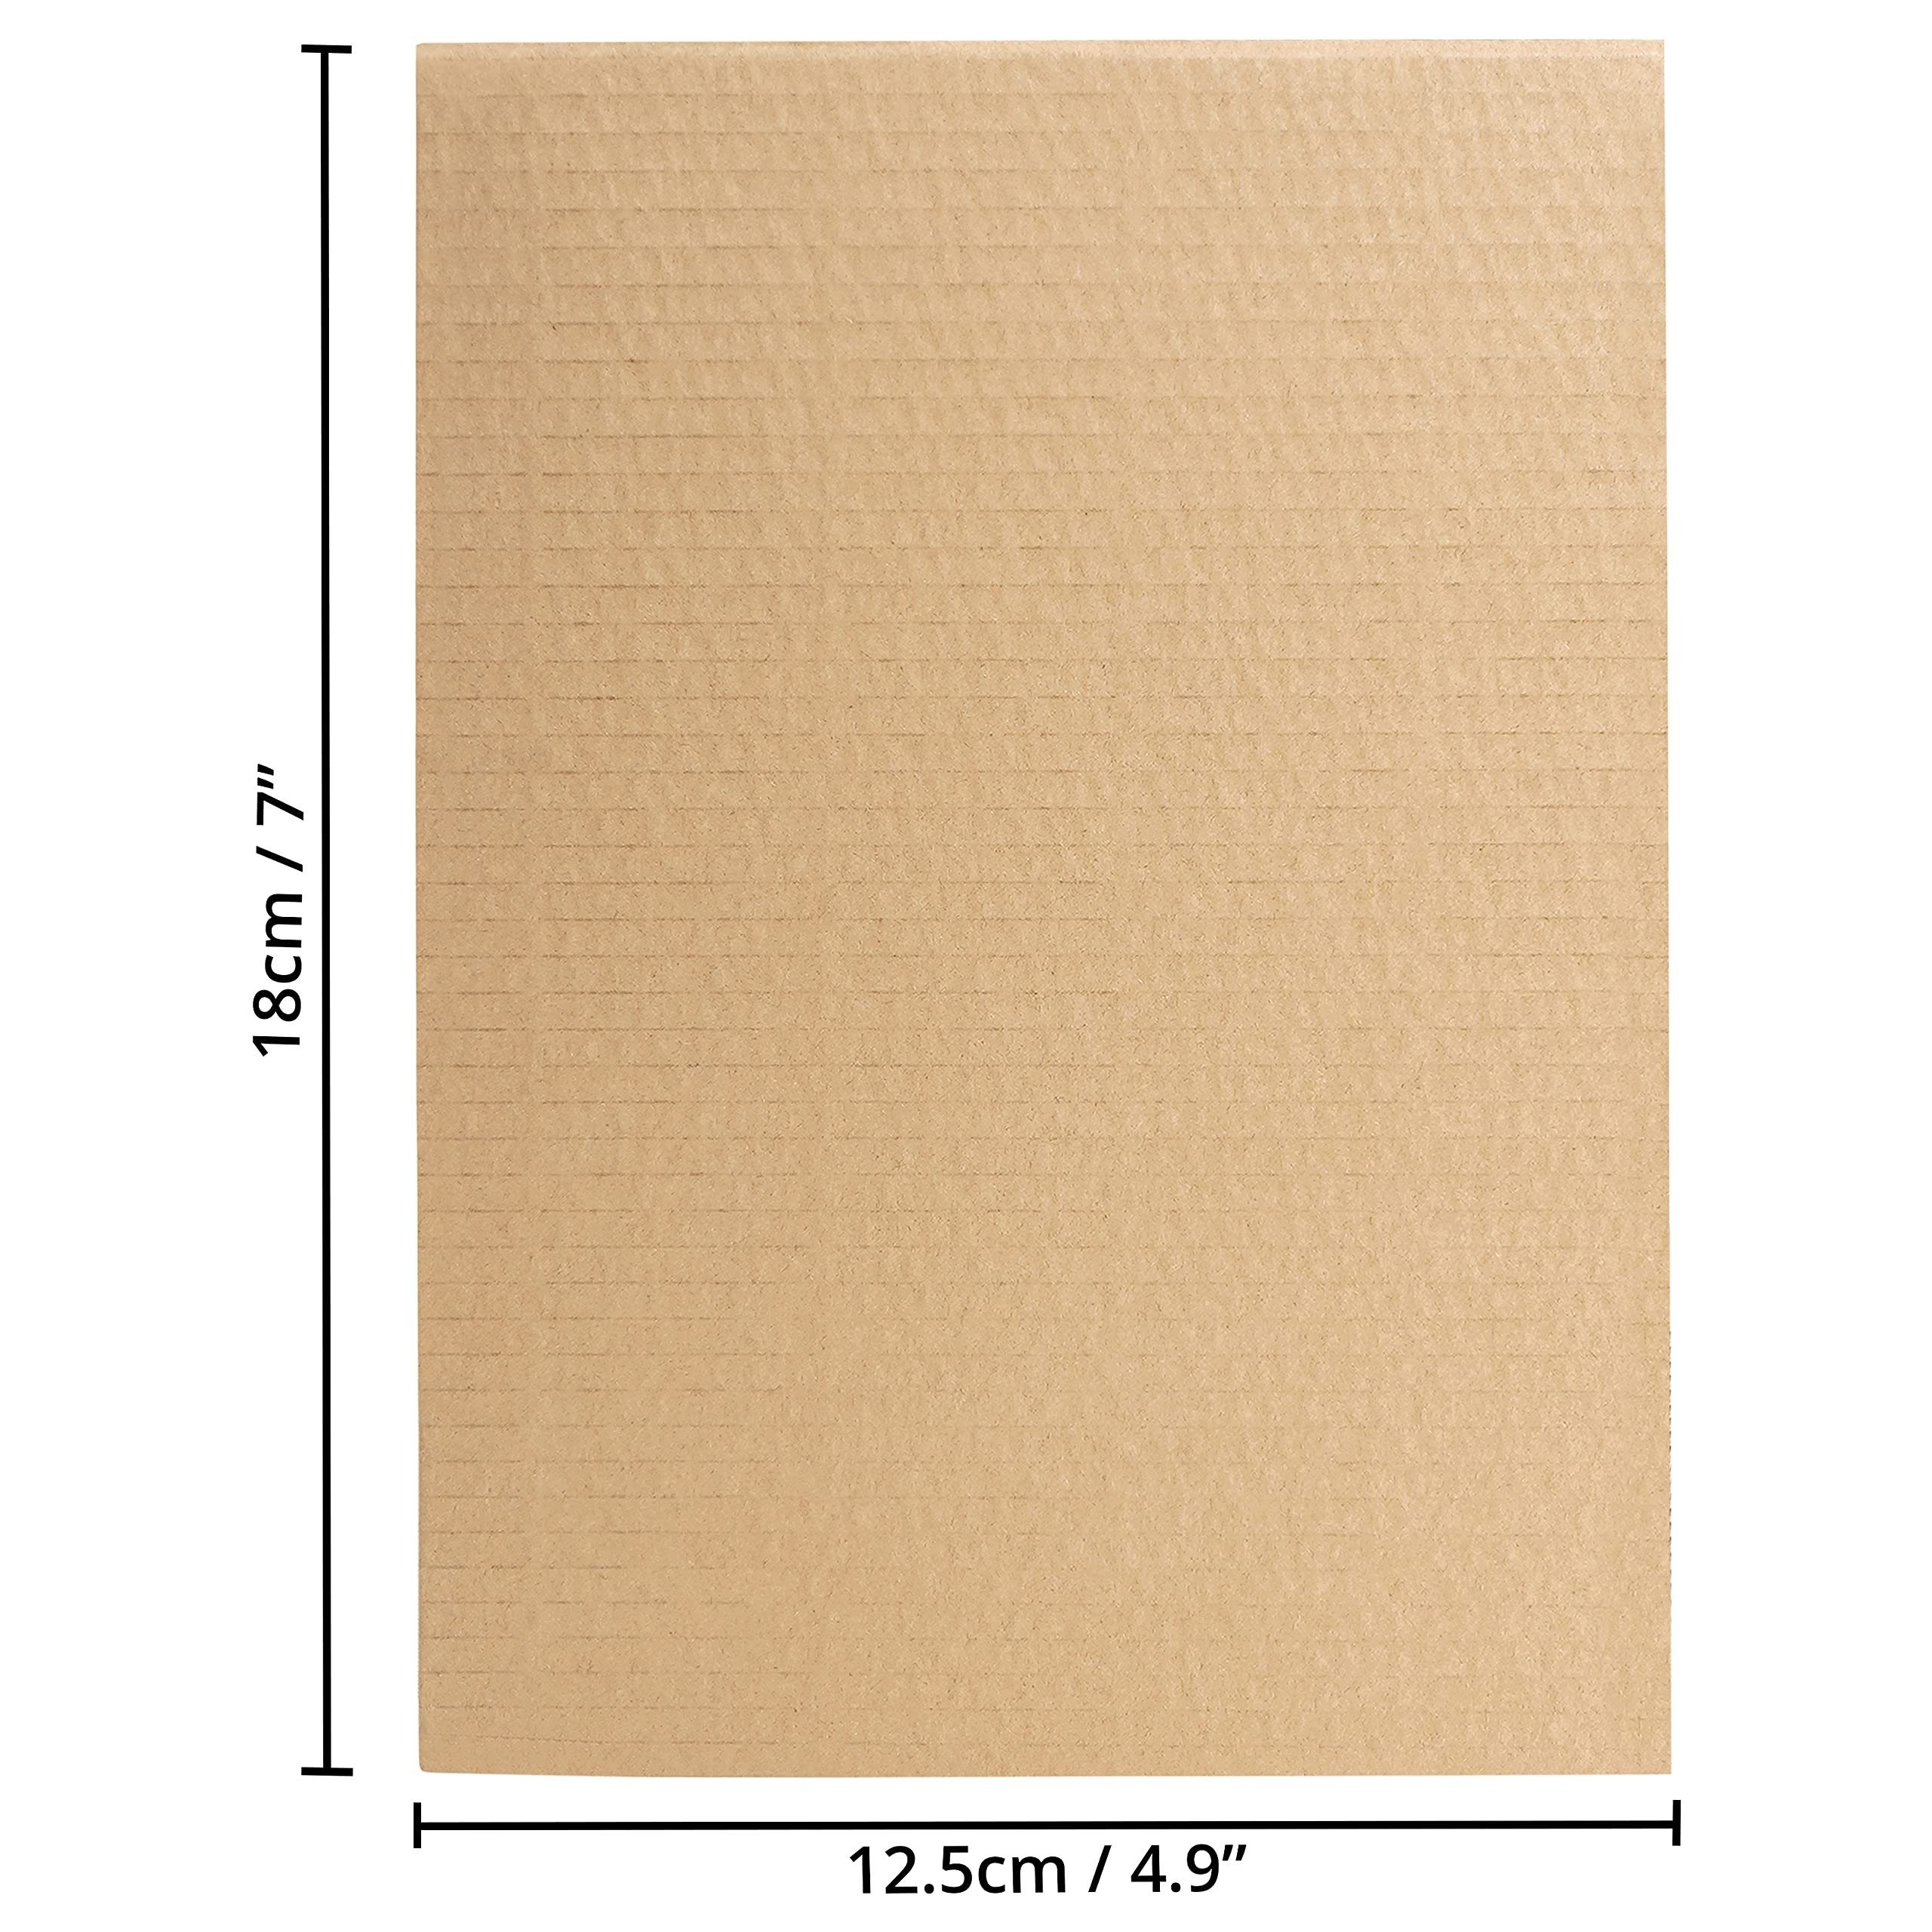 Belle Vous Stück) - pcs) Dicke, 18x12.5cm Aquarellpapier - Braunes 2.8mm Brown - Thick (100 - 18x12.5cm Craft (100 Bastelkarton Cardboard 2.8mm